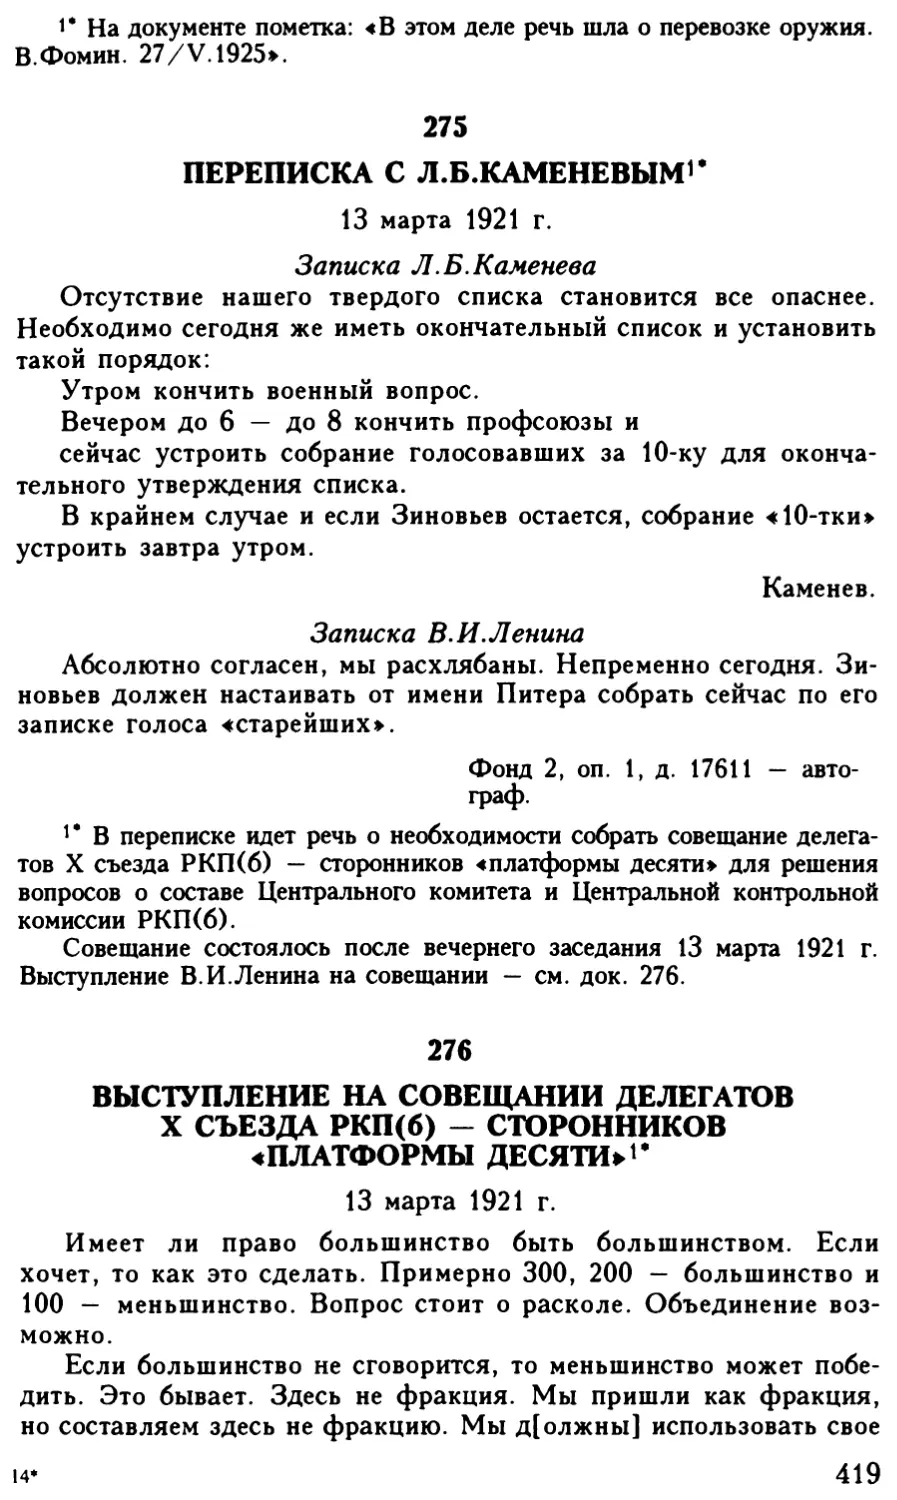 275. Переписка с Л.Б.Каменевым. 13 марта 1921 г